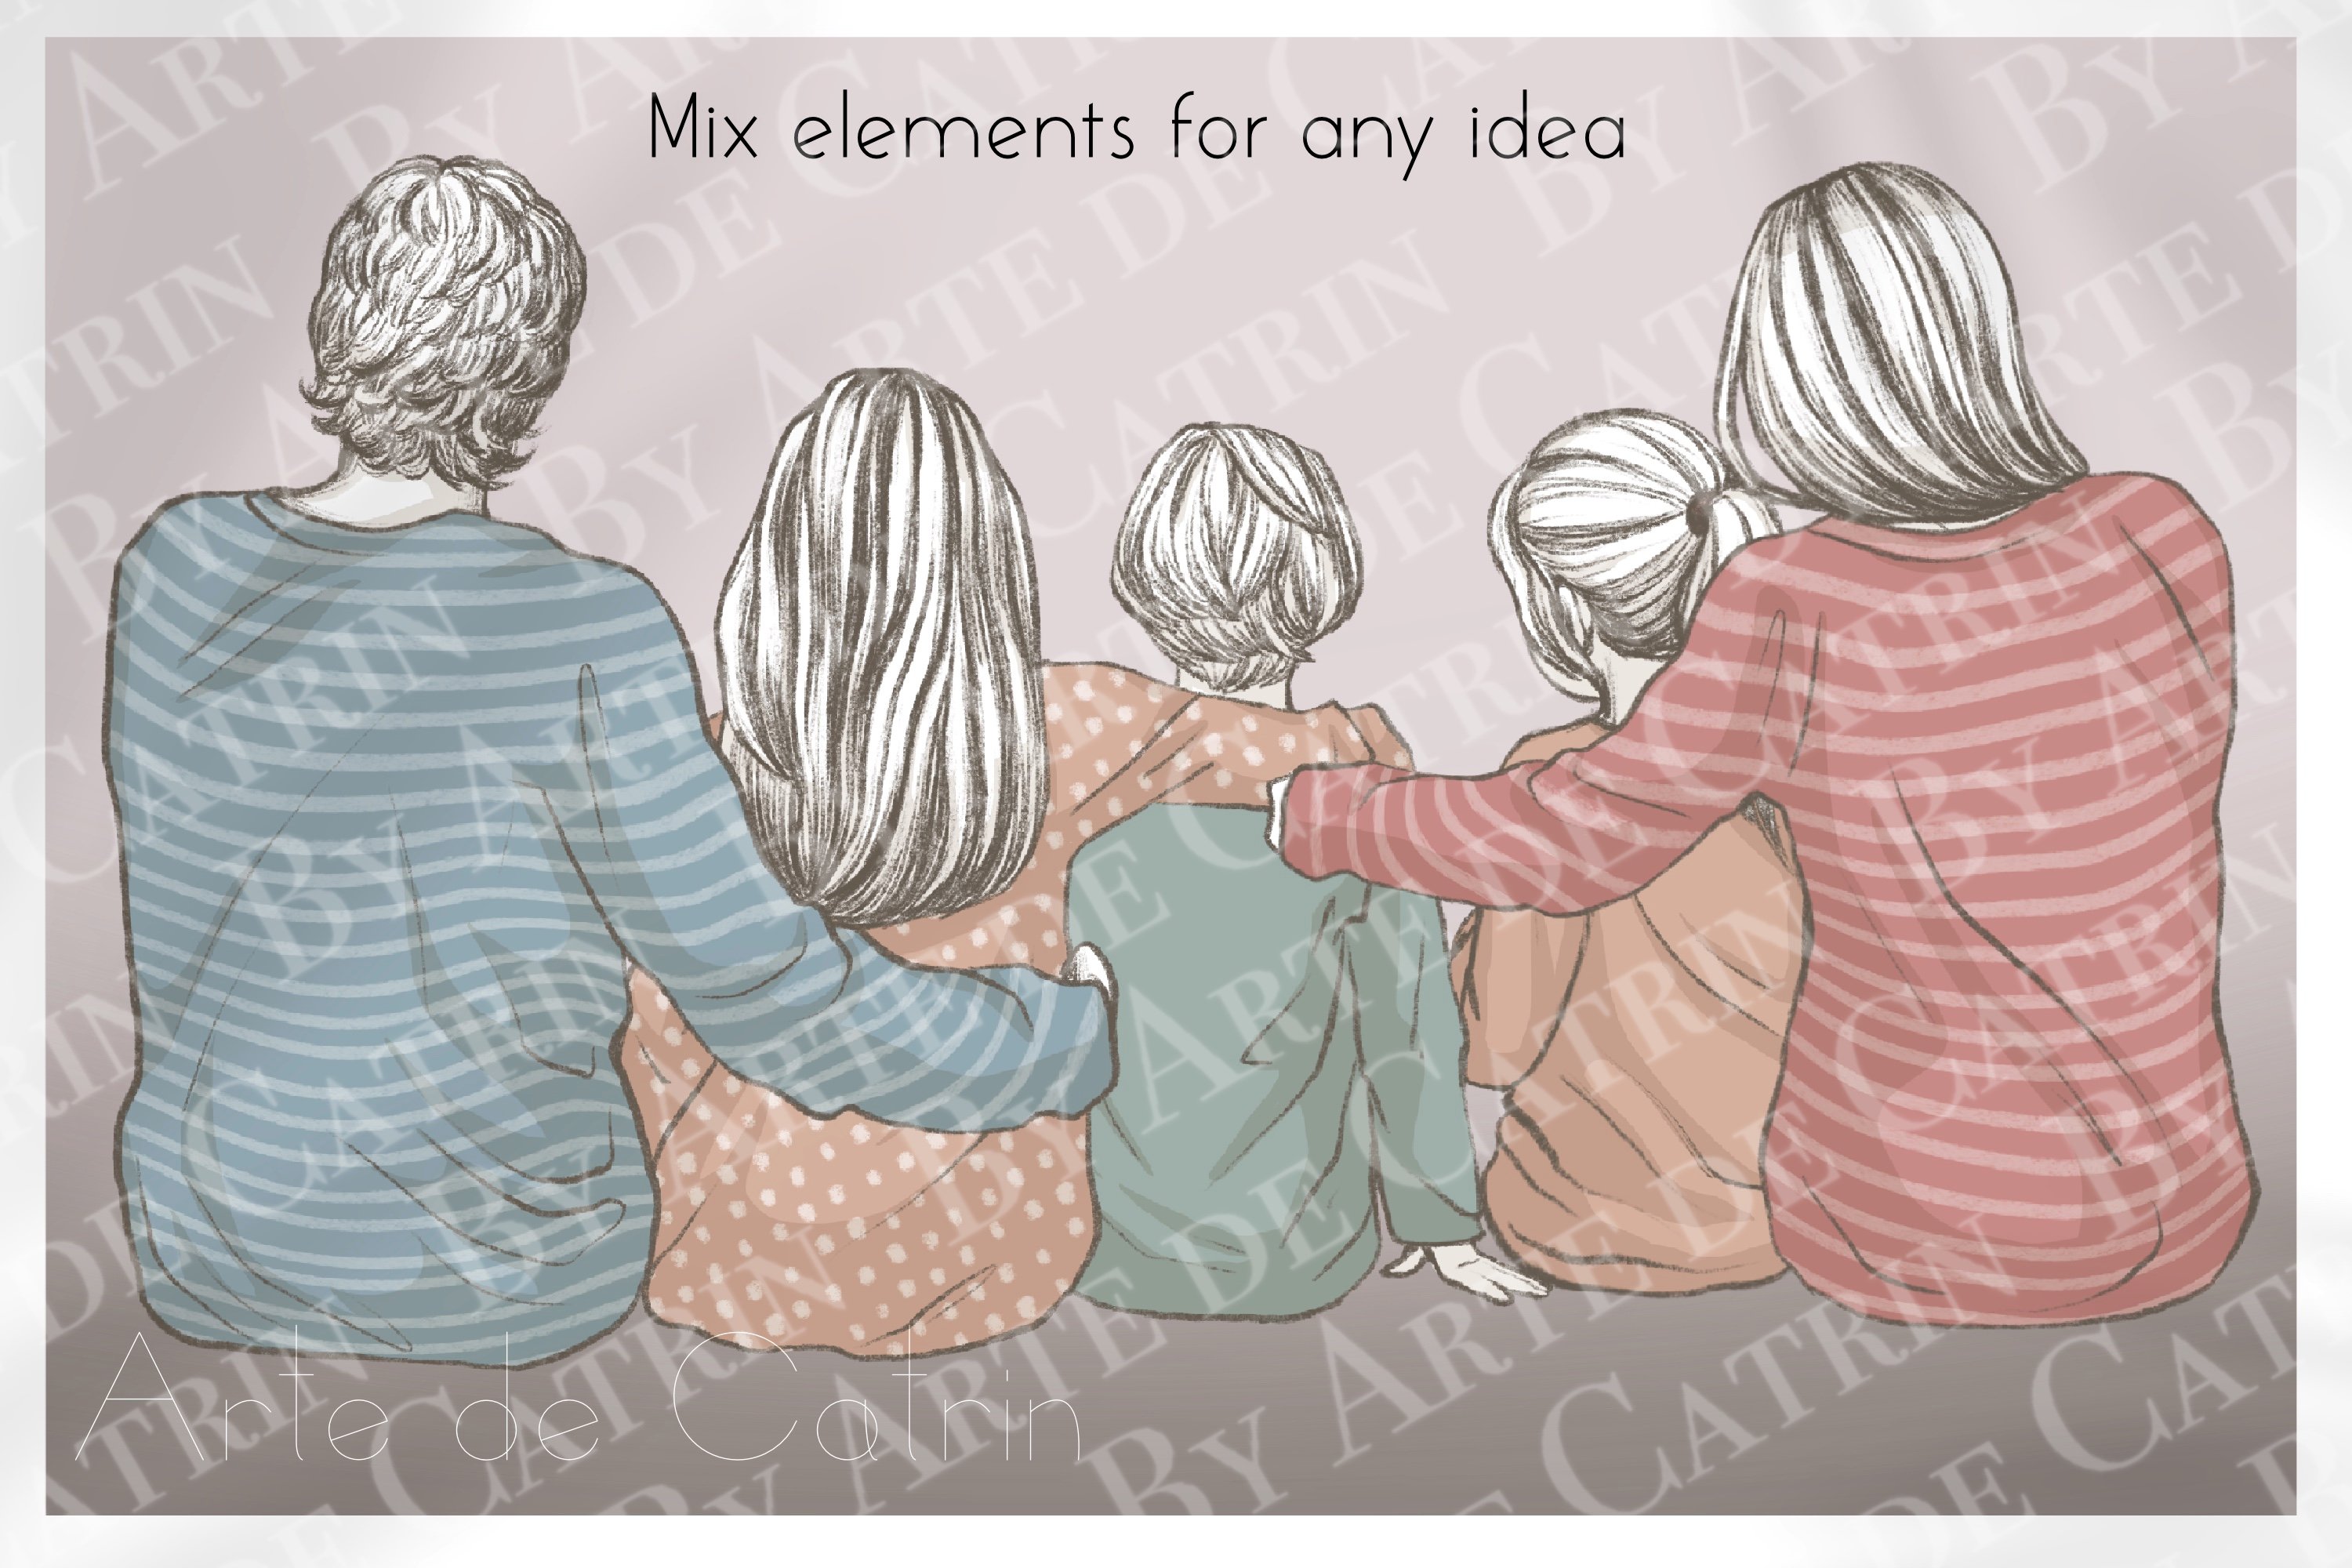 Mix family elements for any idea.